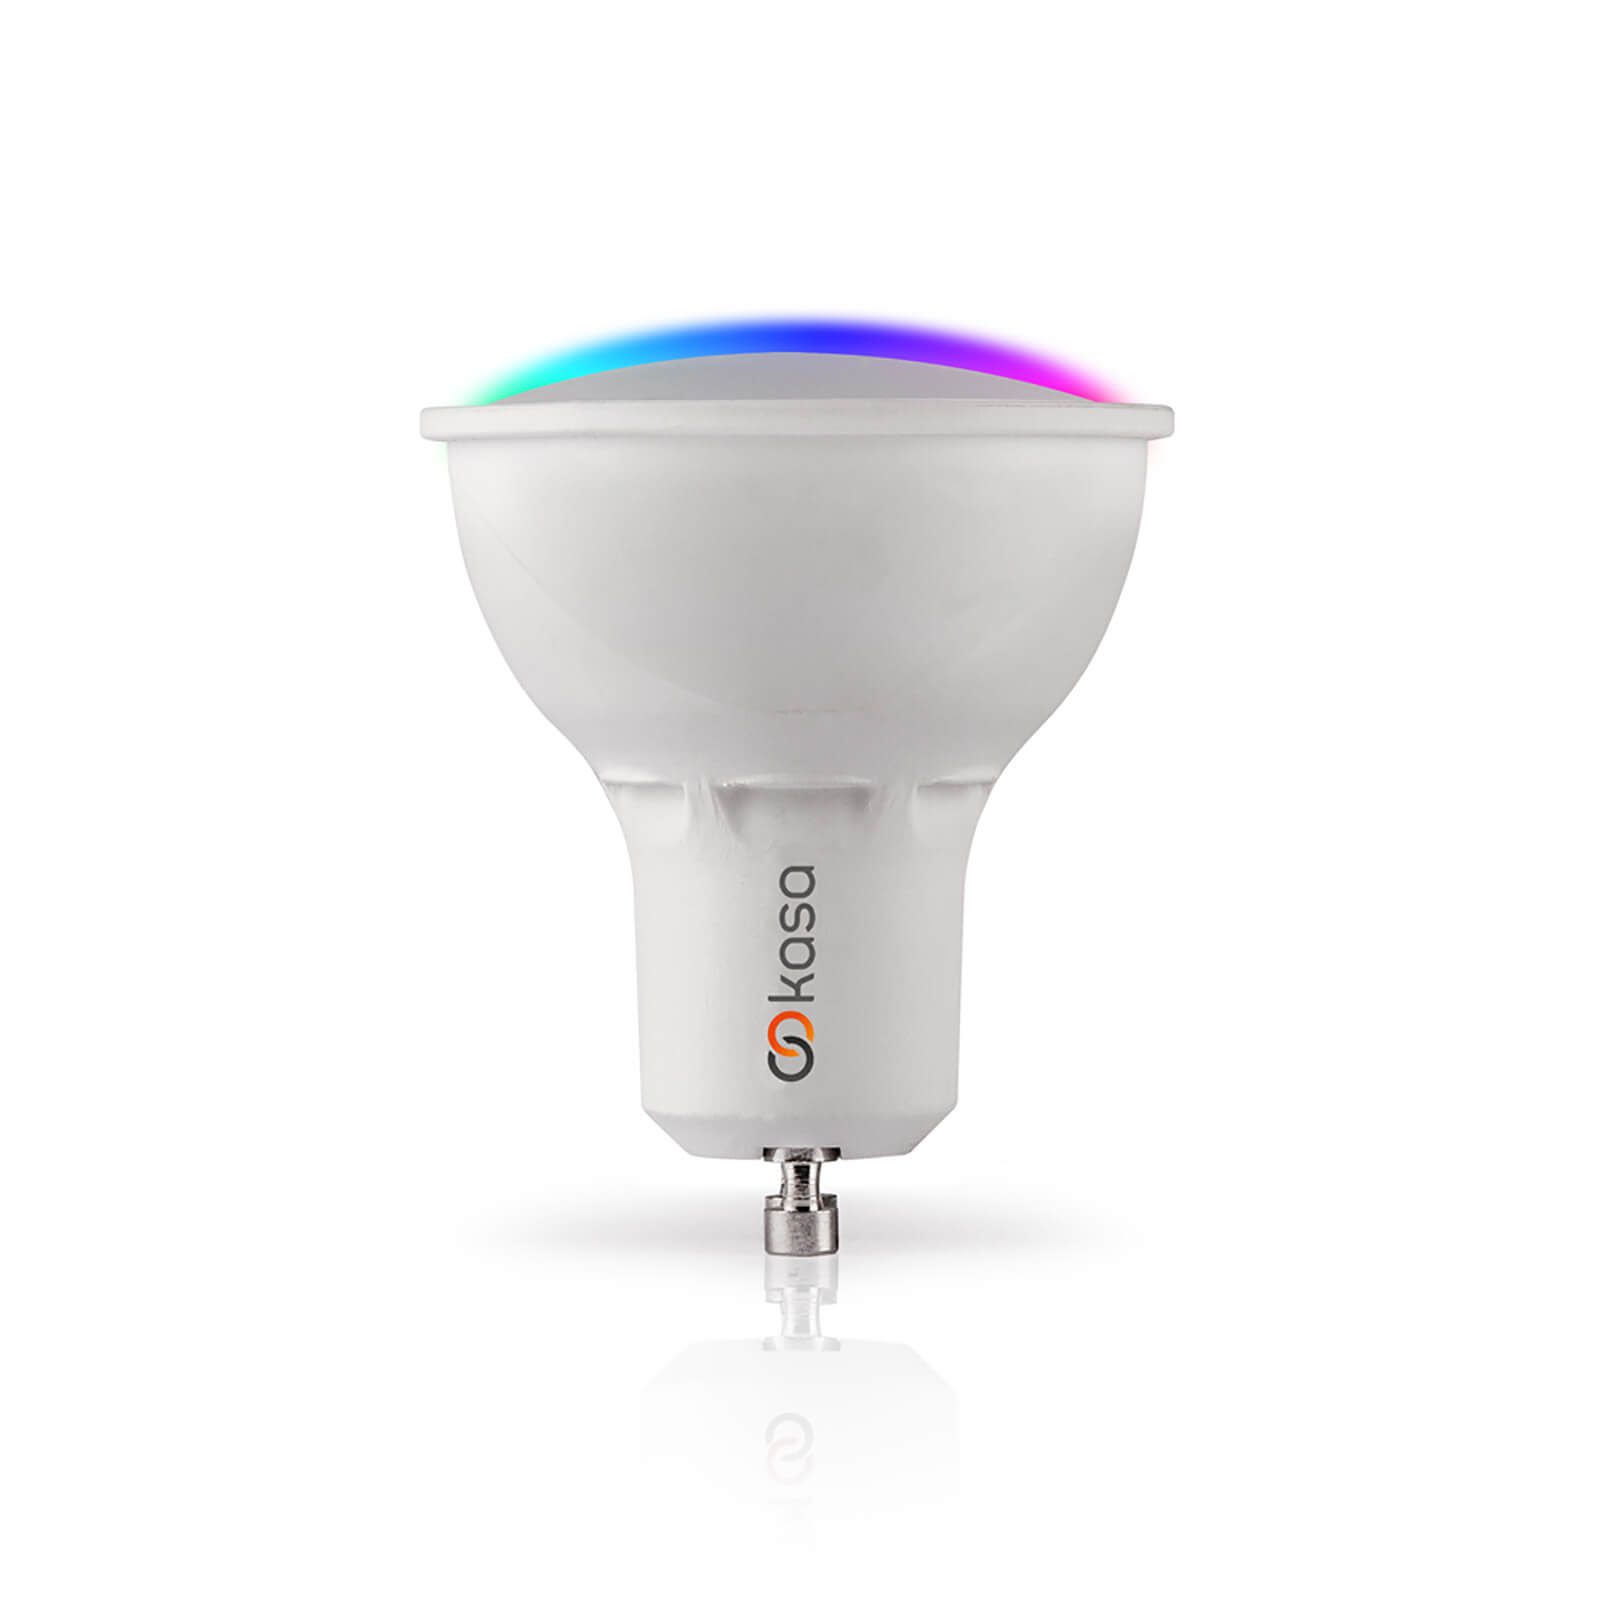 Veho Kasa Bluetooth Smart Lighting LED GU10 Bulb with Free App